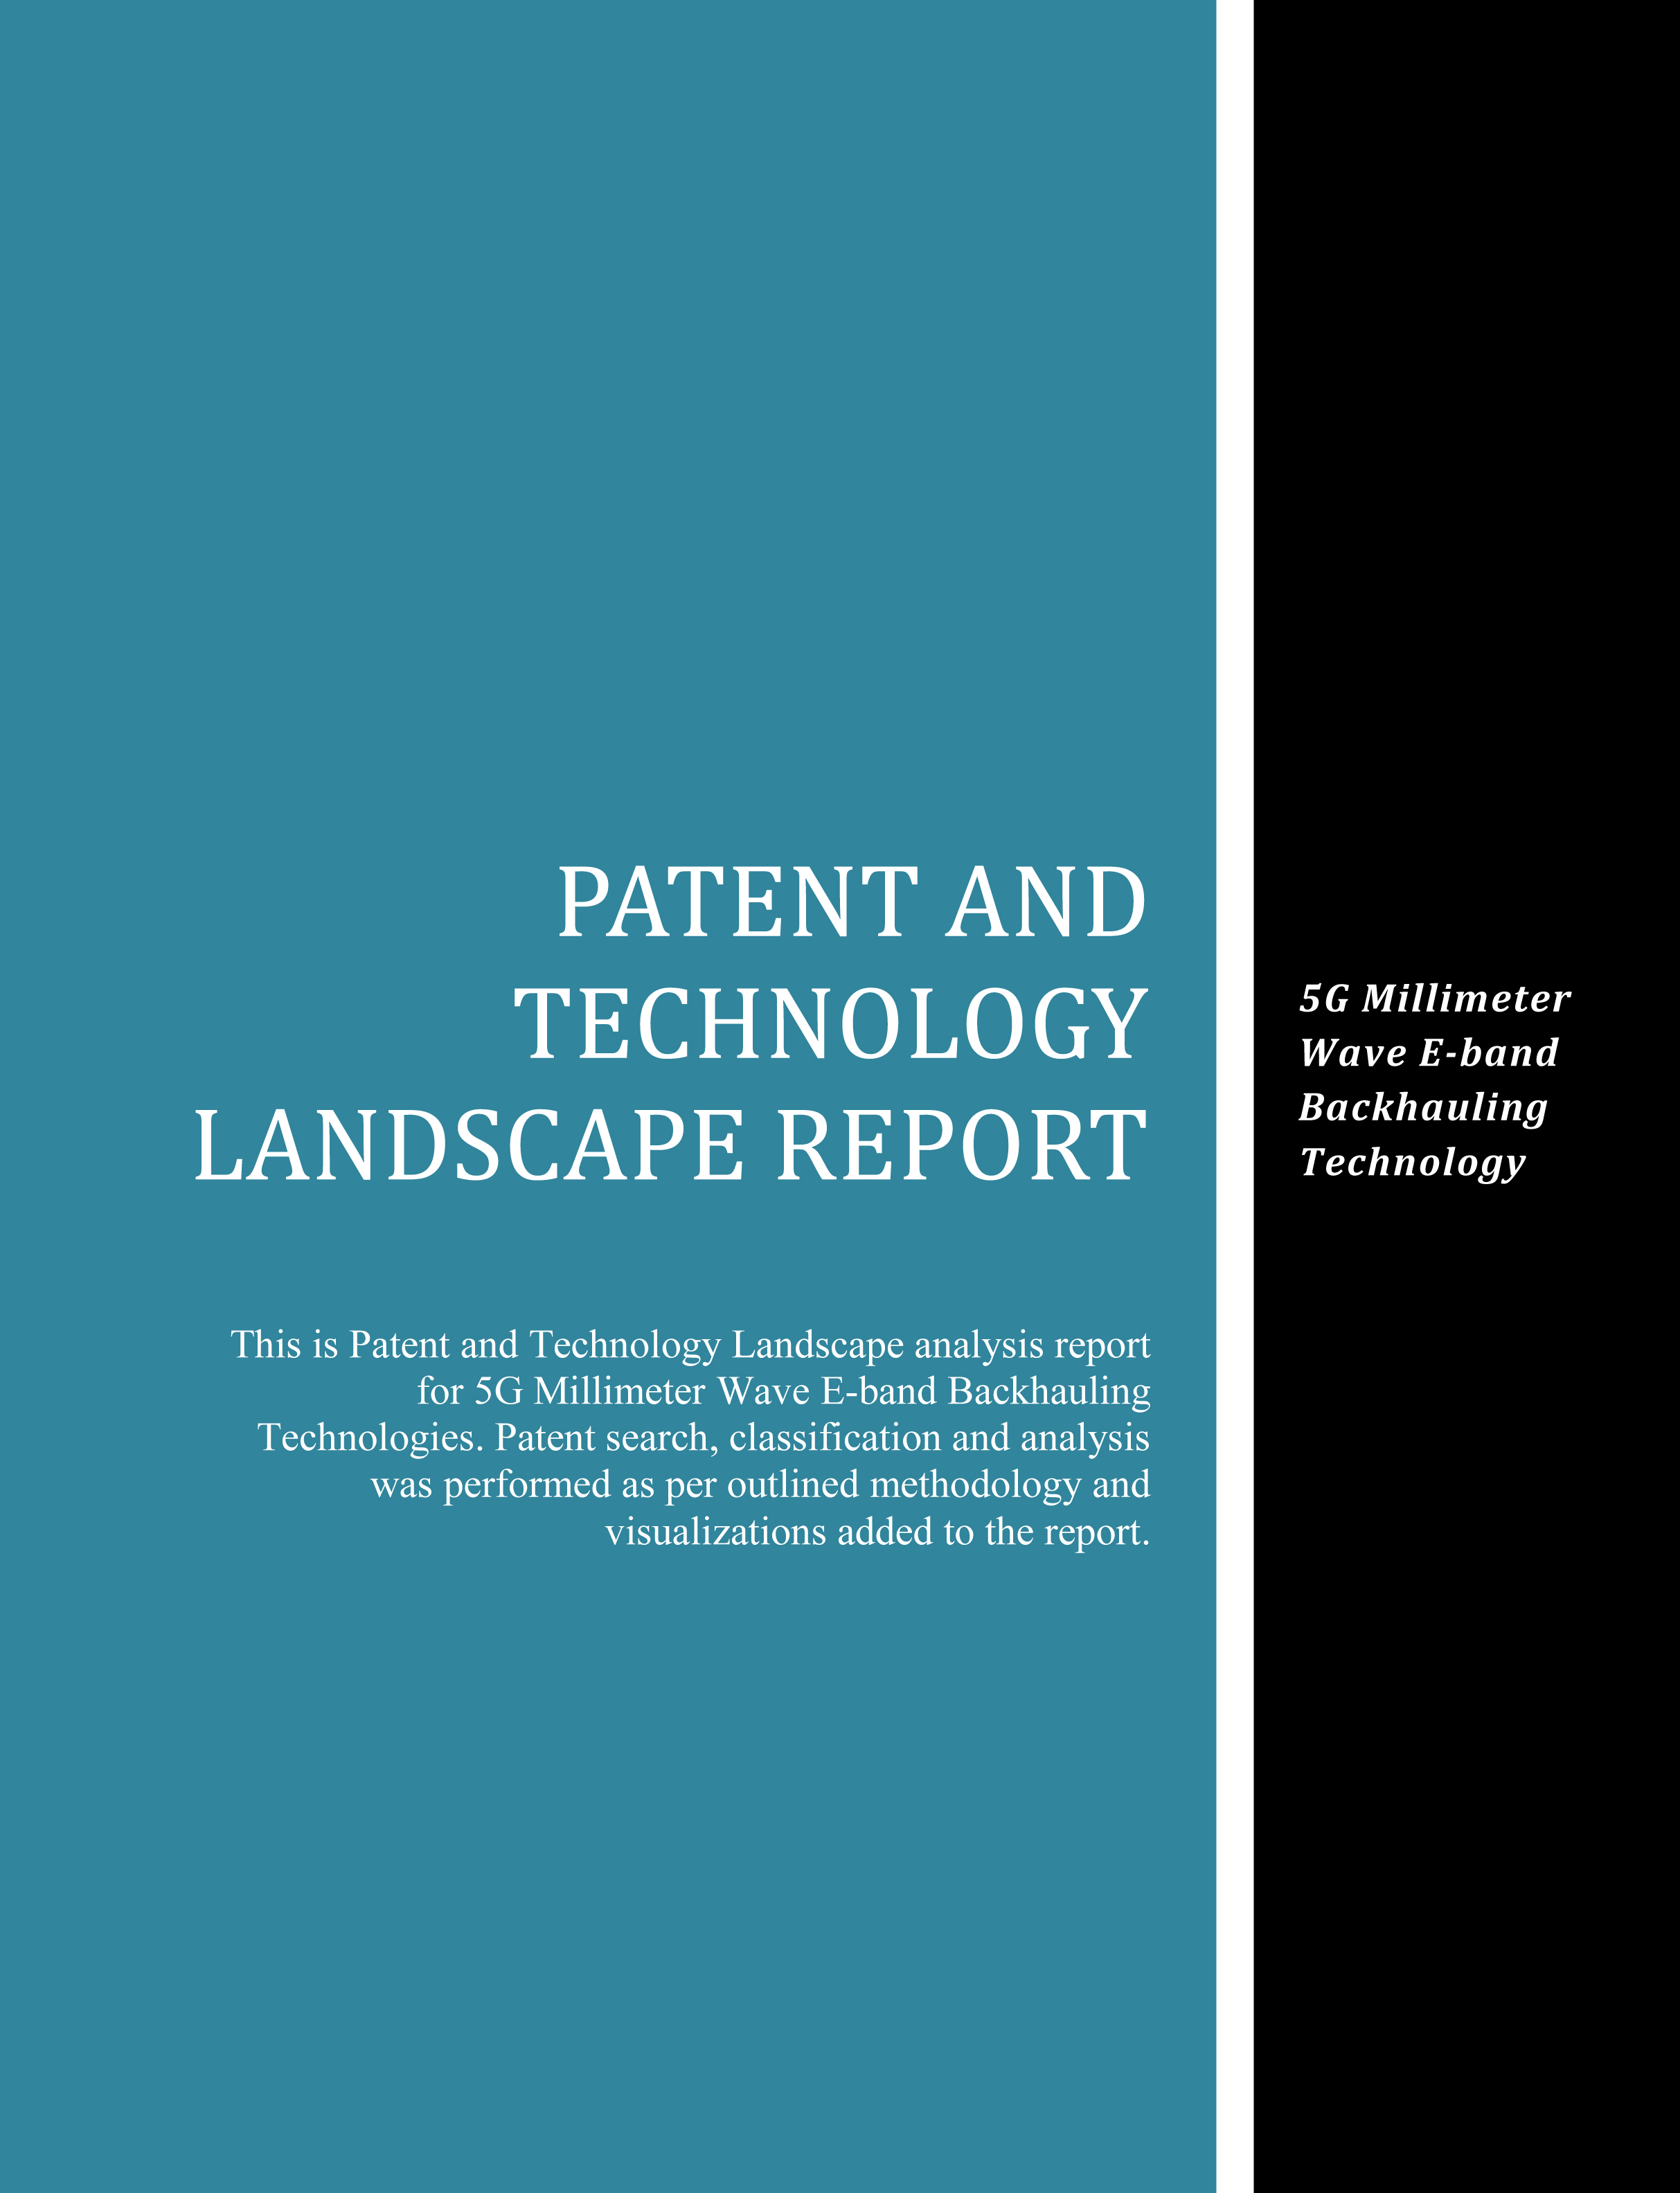 5G E-band Backhauling Technology Landscape Report